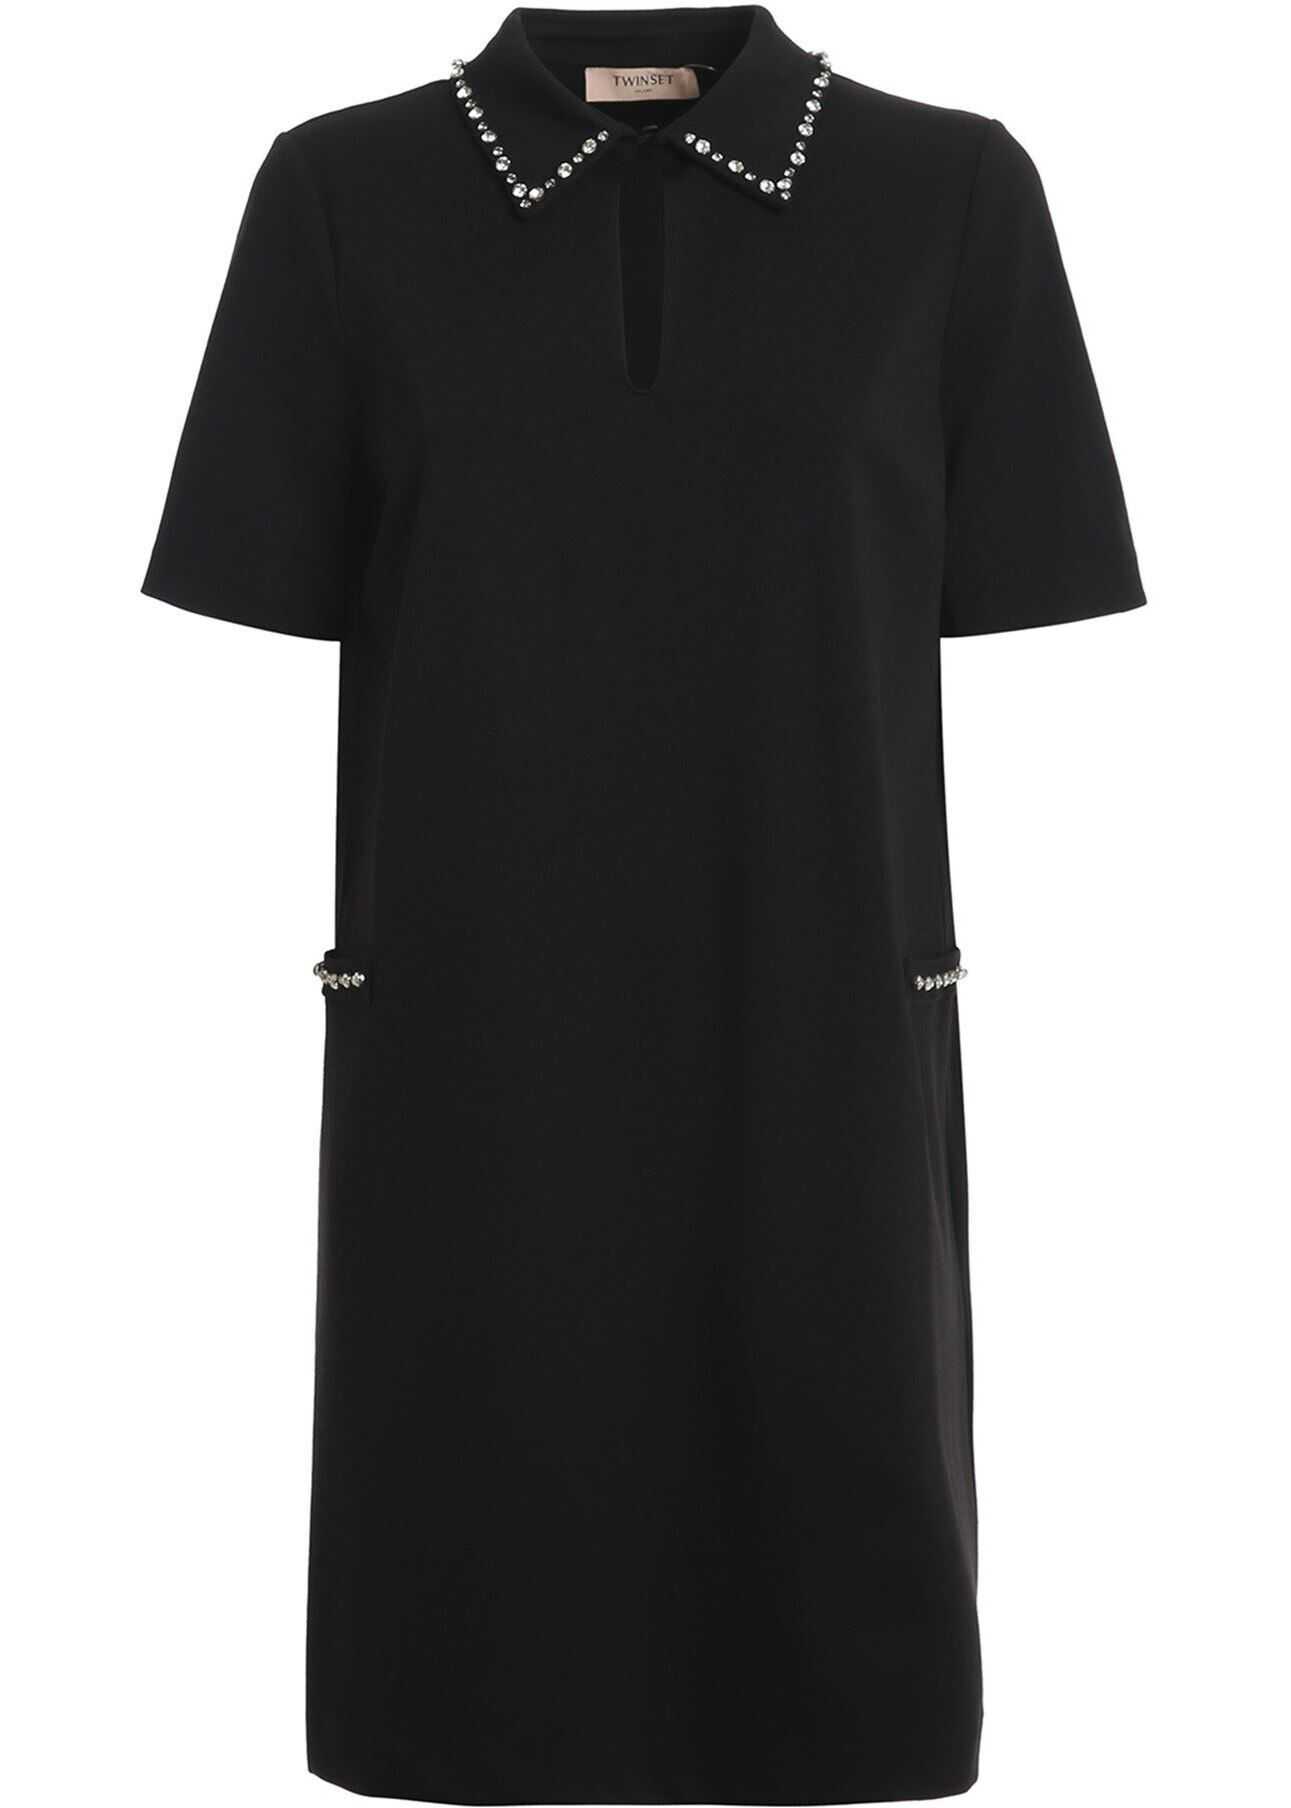 Twin-set Simona Barbieri Embellished Dress In Black Black